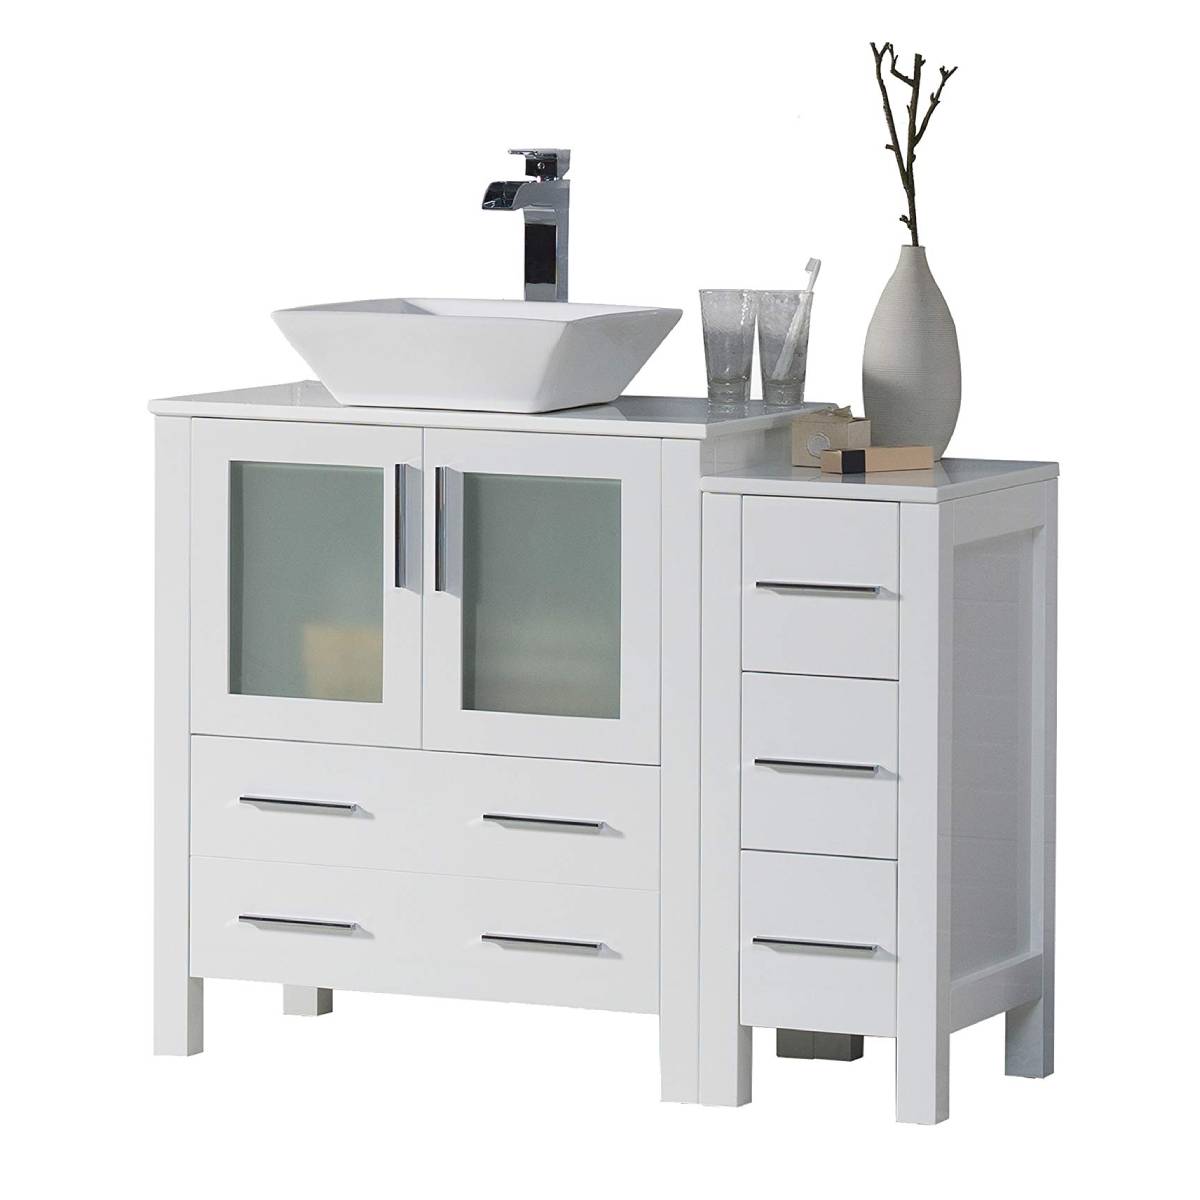 Sydney - 42 Inch Vanity with Ceramic Vessel Sink & Side Cabinet - White - Molaix842708124721Sydney001 42S 01 V